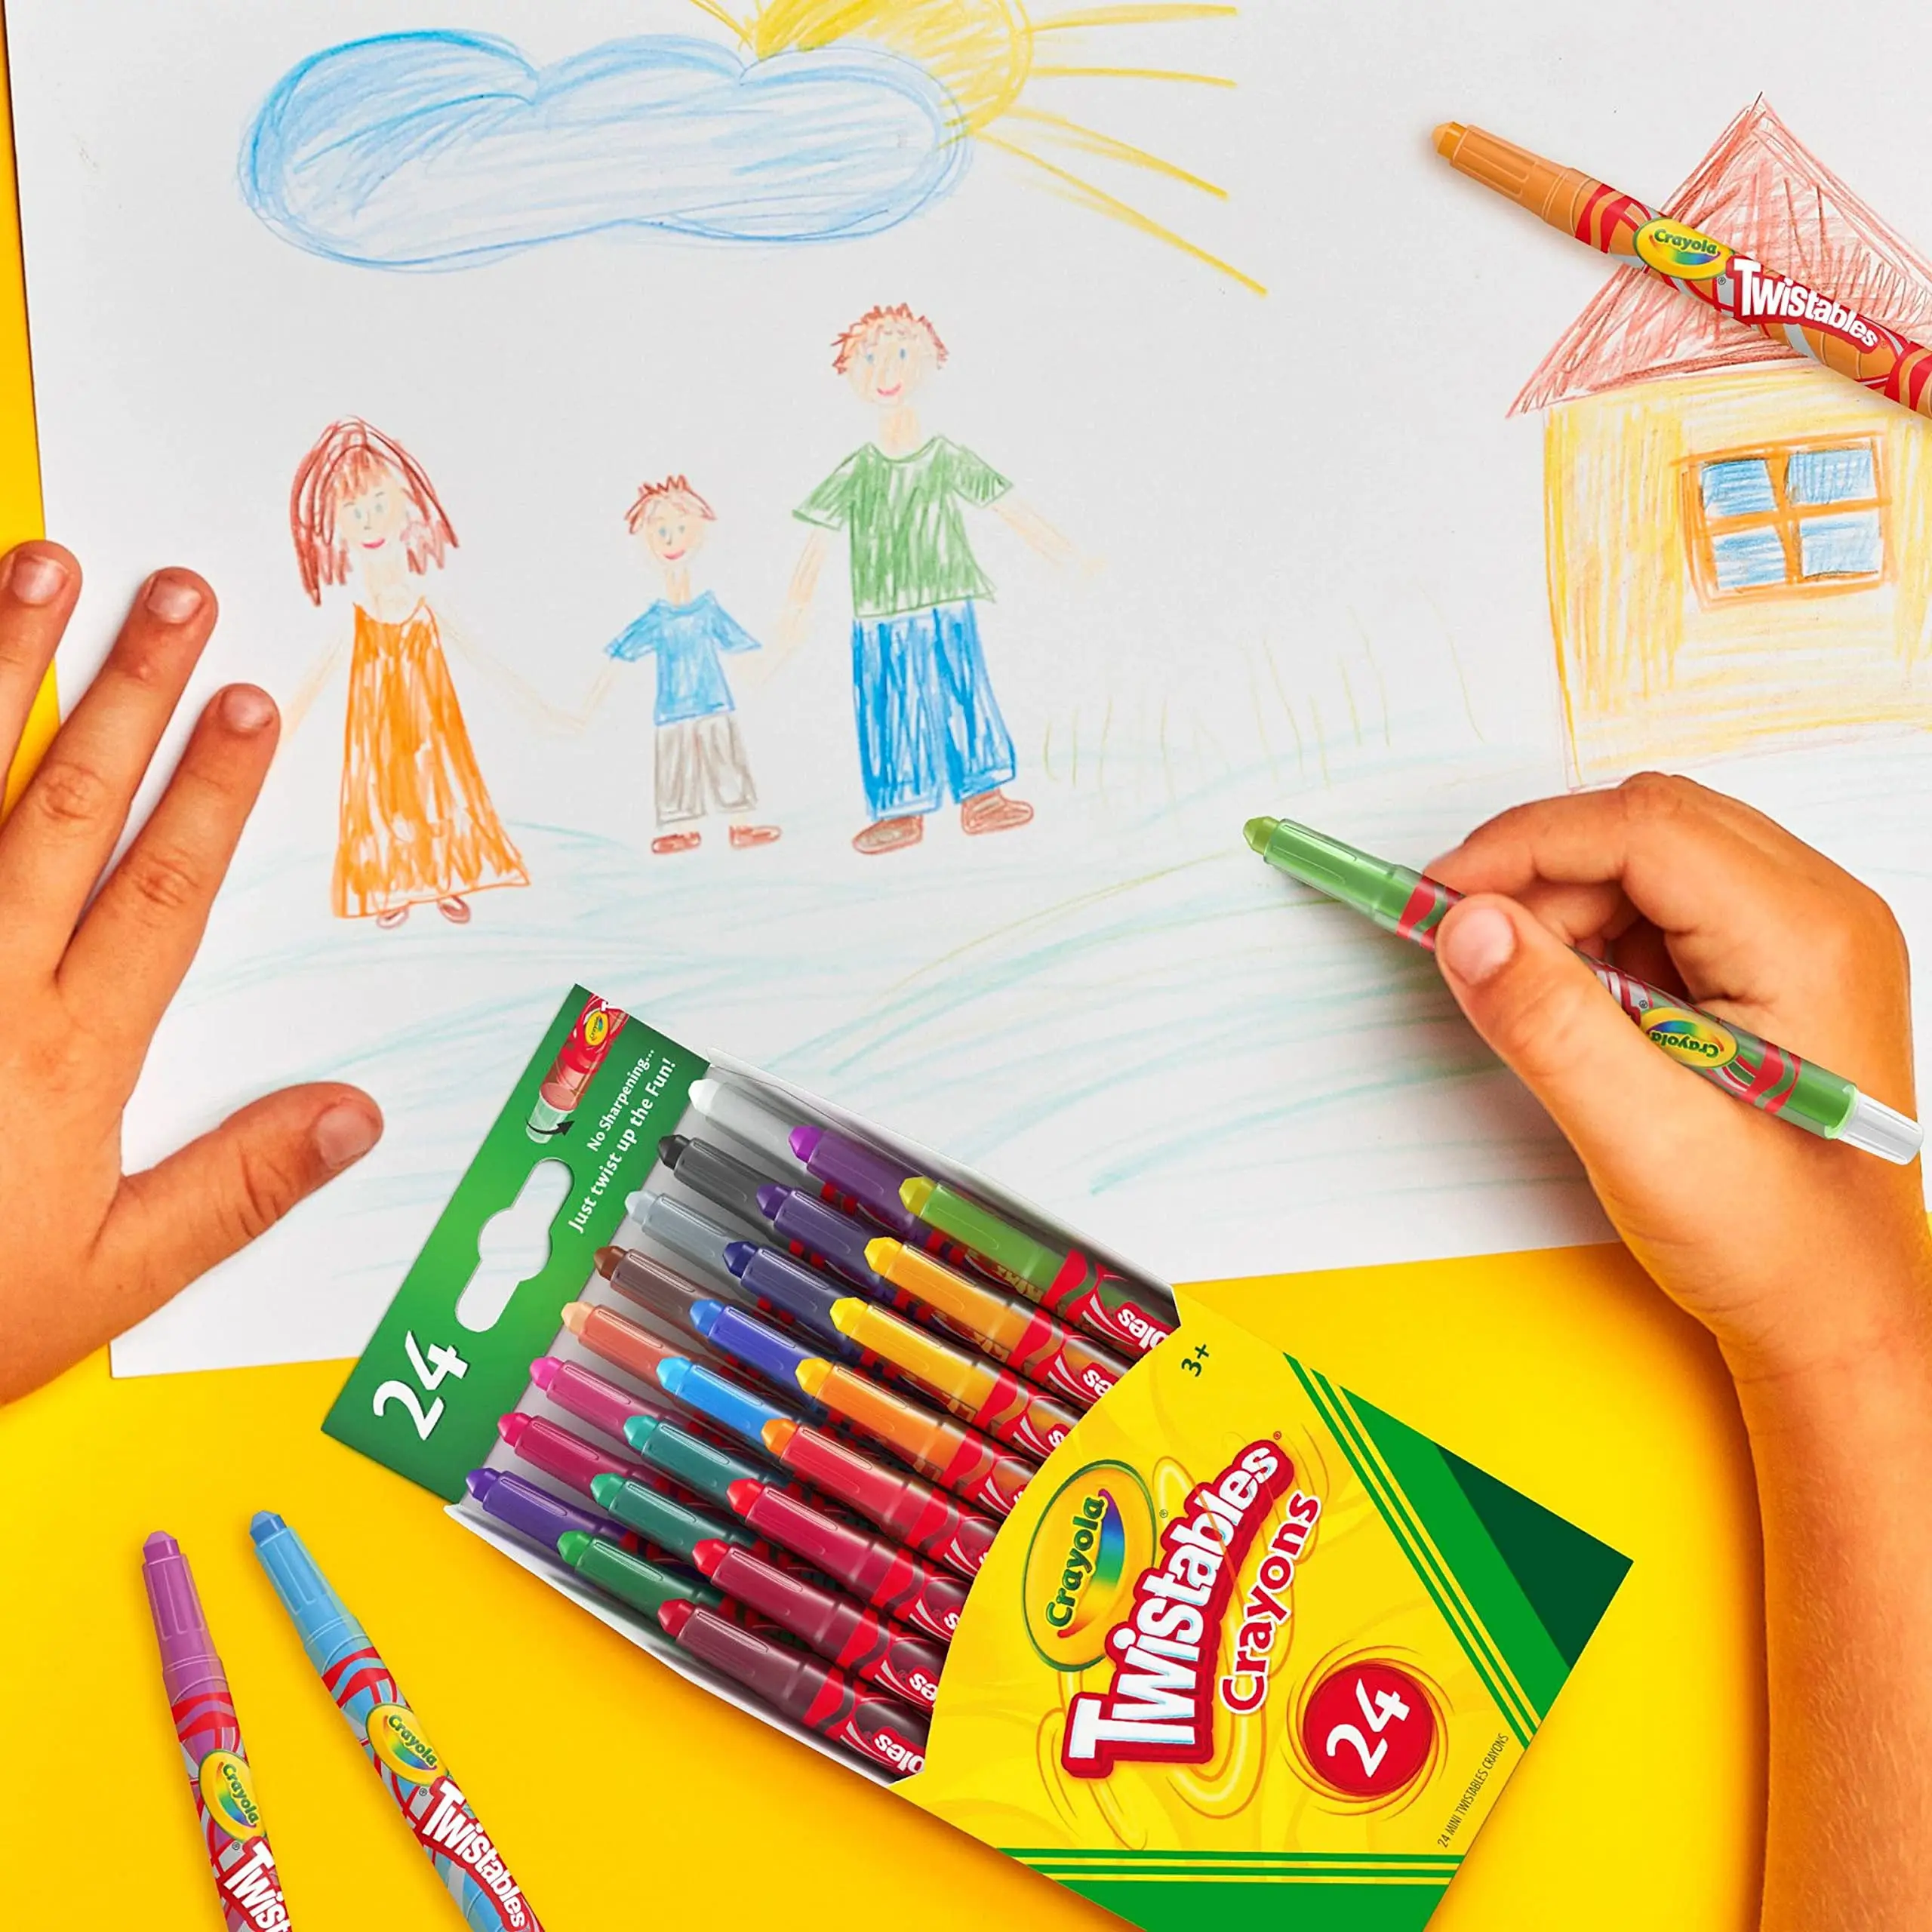  Crayola Twistables Fun Effect Crayons (24 Count) : Toys & Games